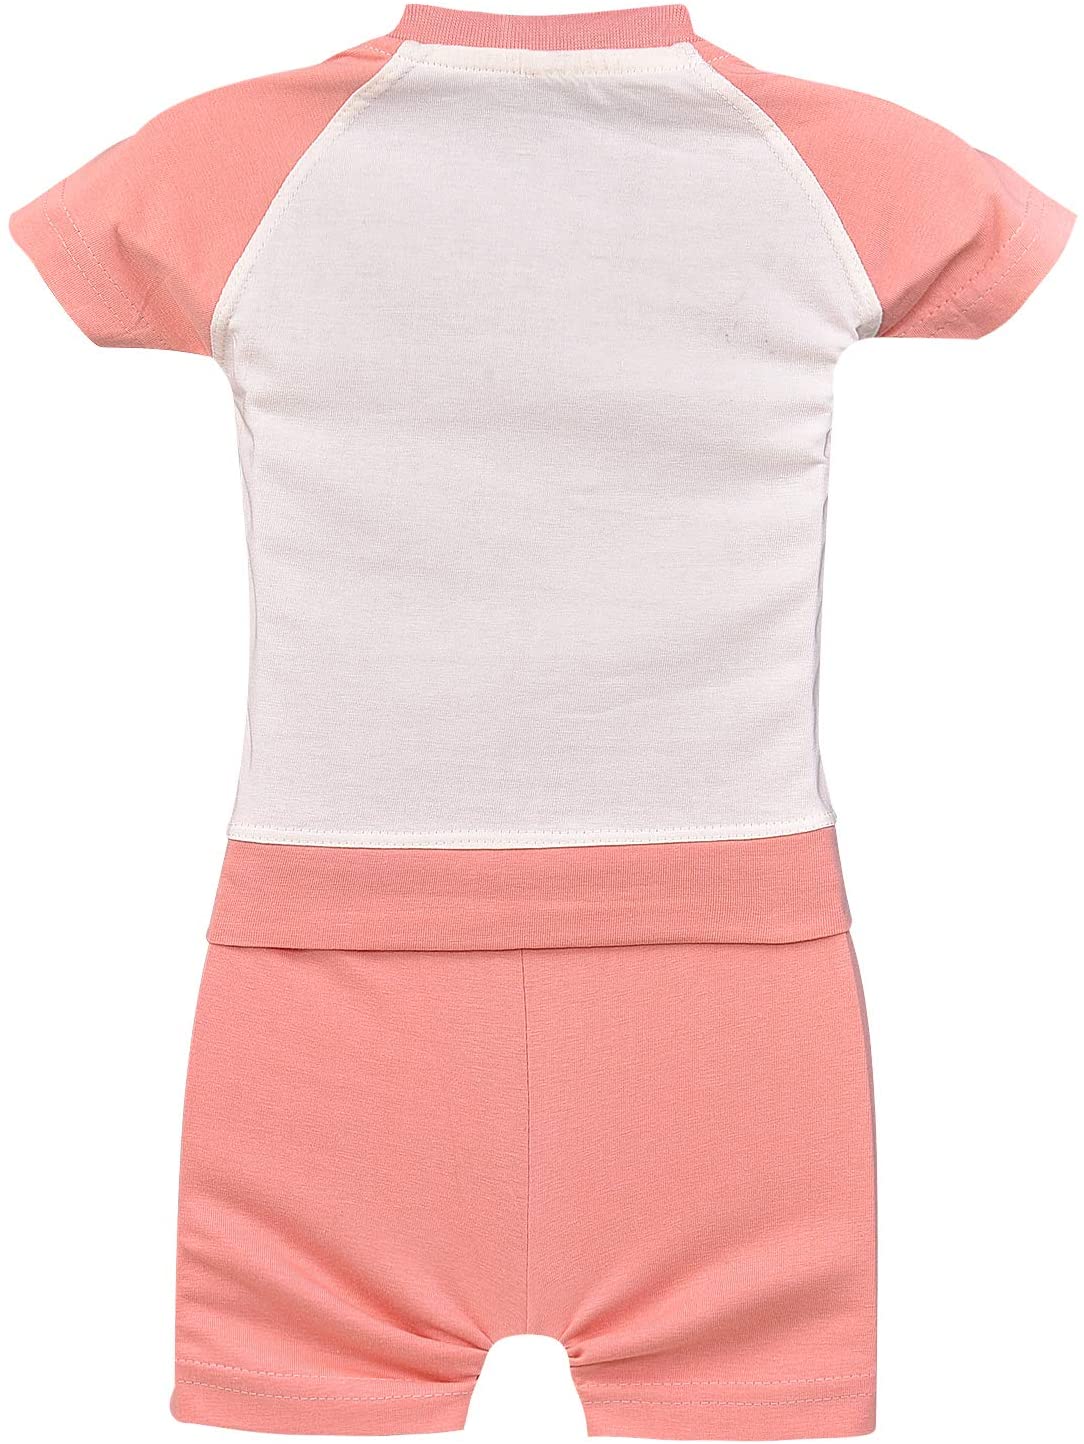 Wish Karo Unisex Clothing Sets for Boys & Baby Girls-(bt23pch)